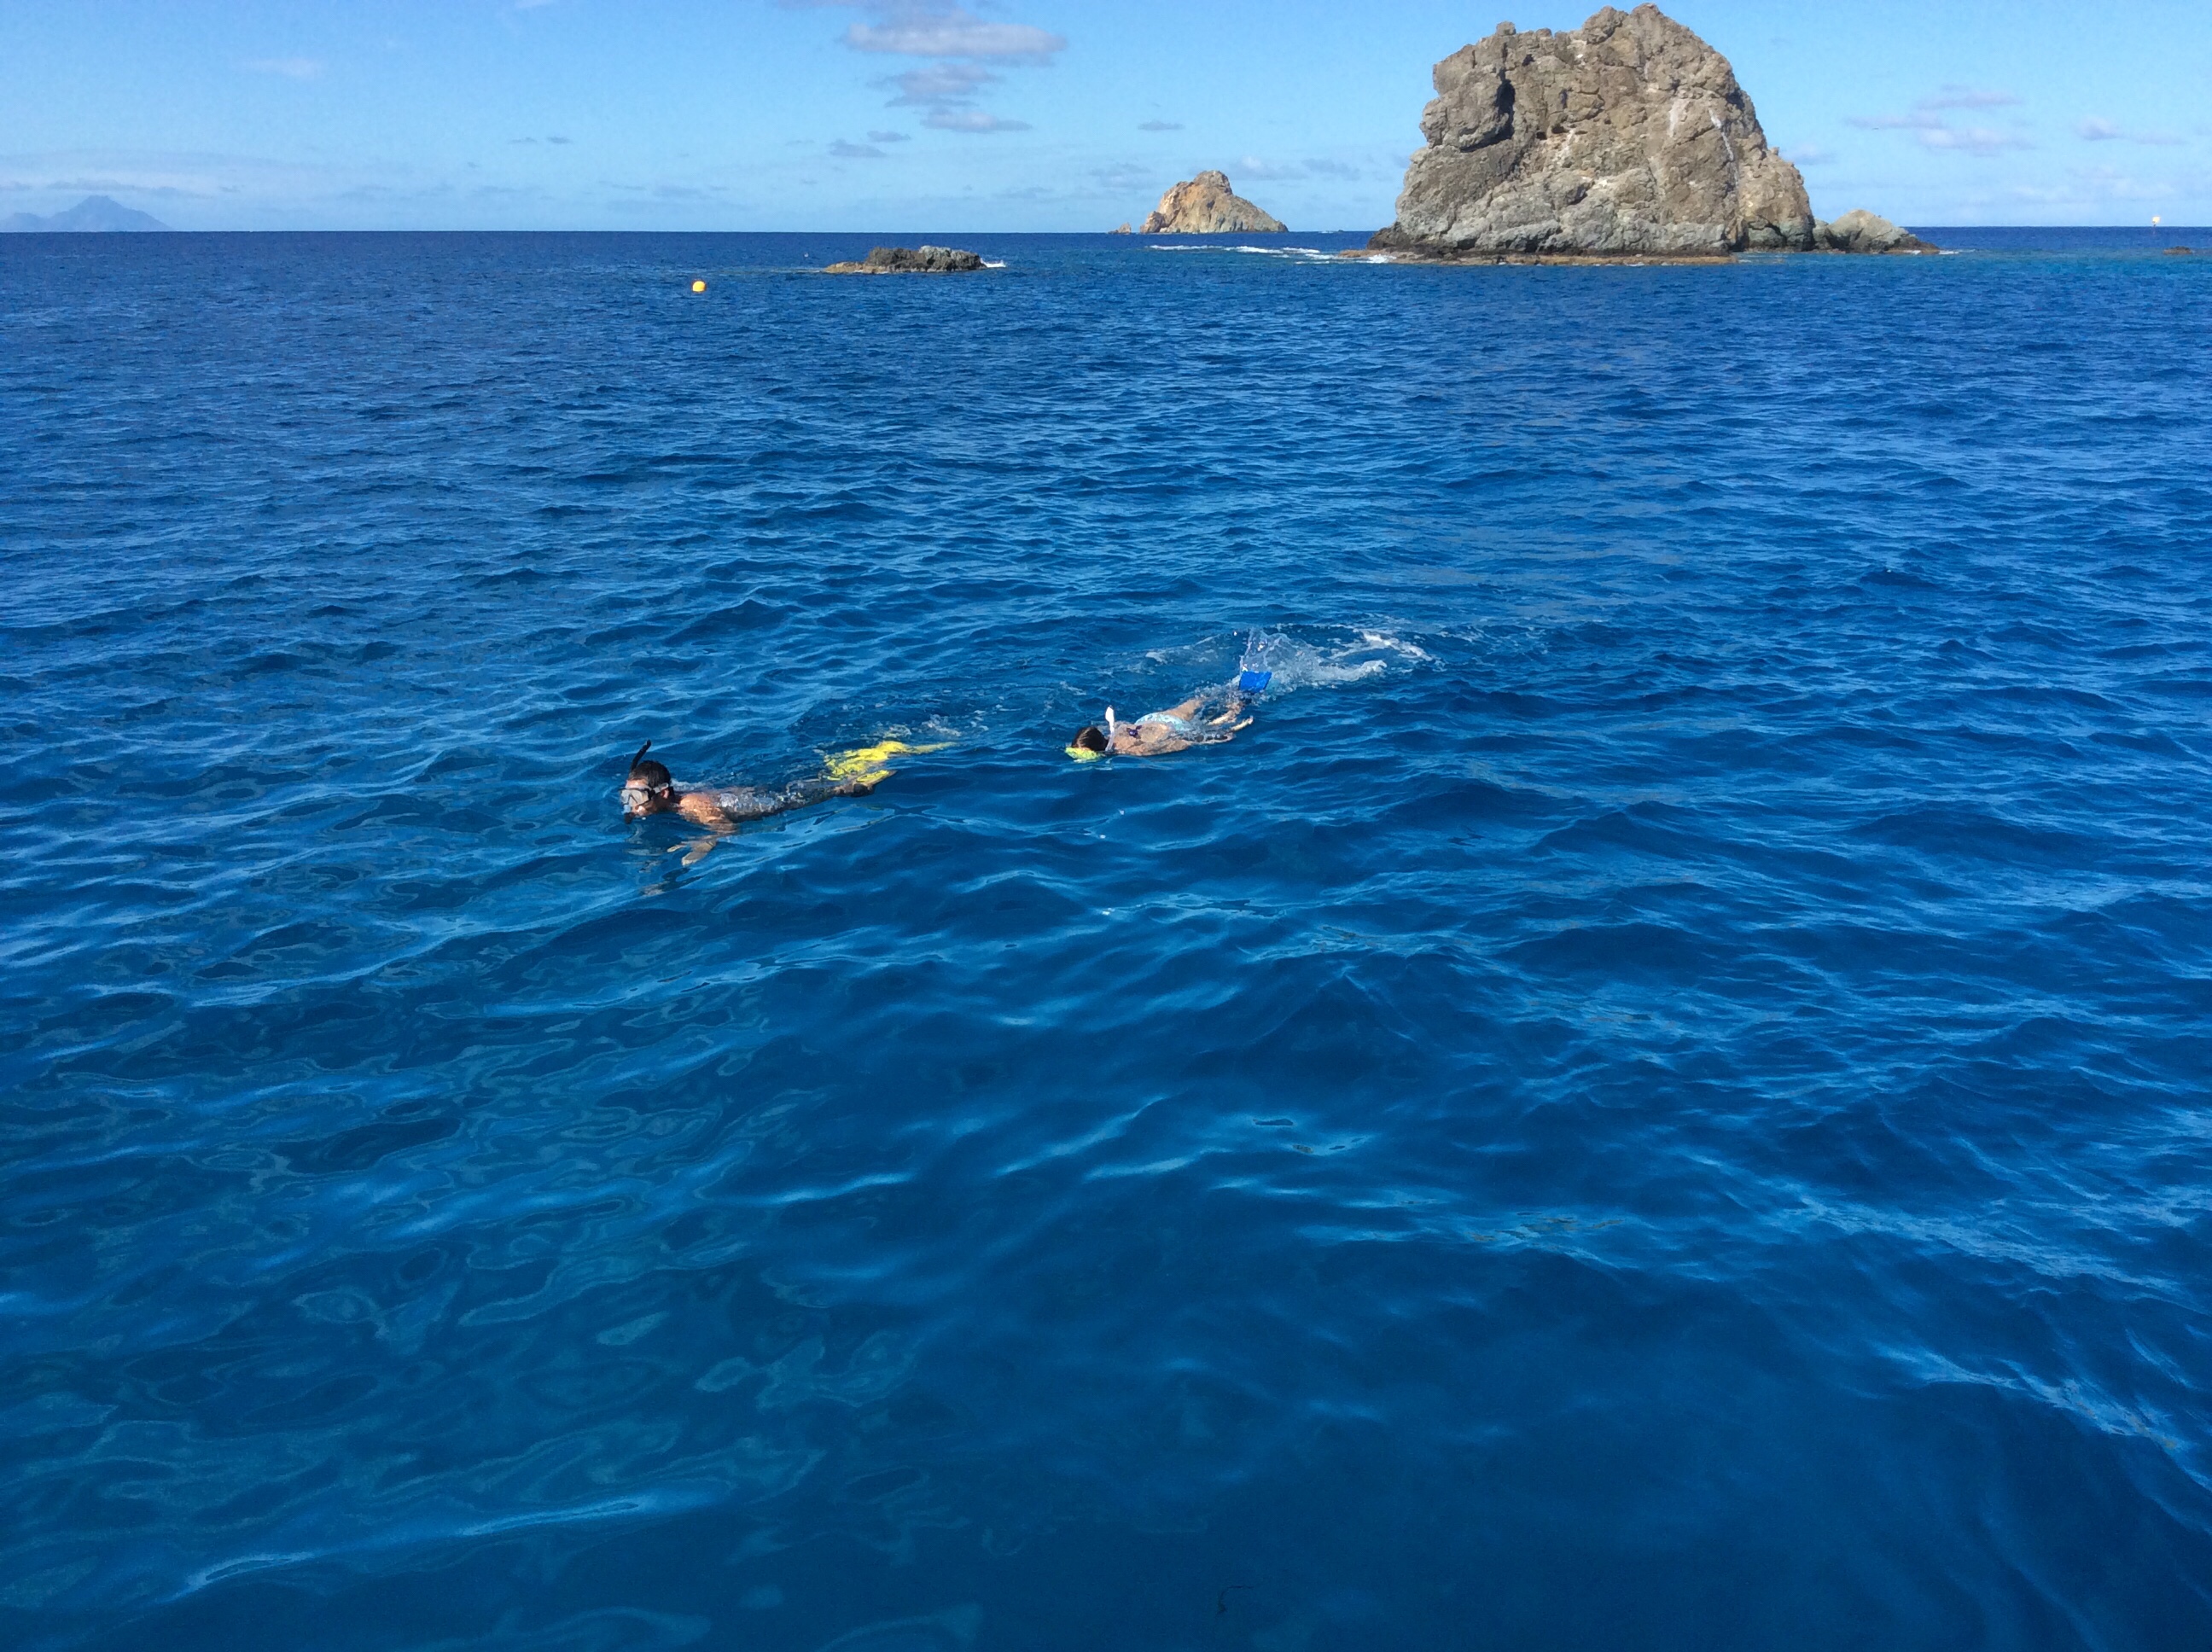 Krisann and Joe snorkeling near and around La Baleine, the whale, part of Les Gros Ilets near Gustavia, St. Barts.